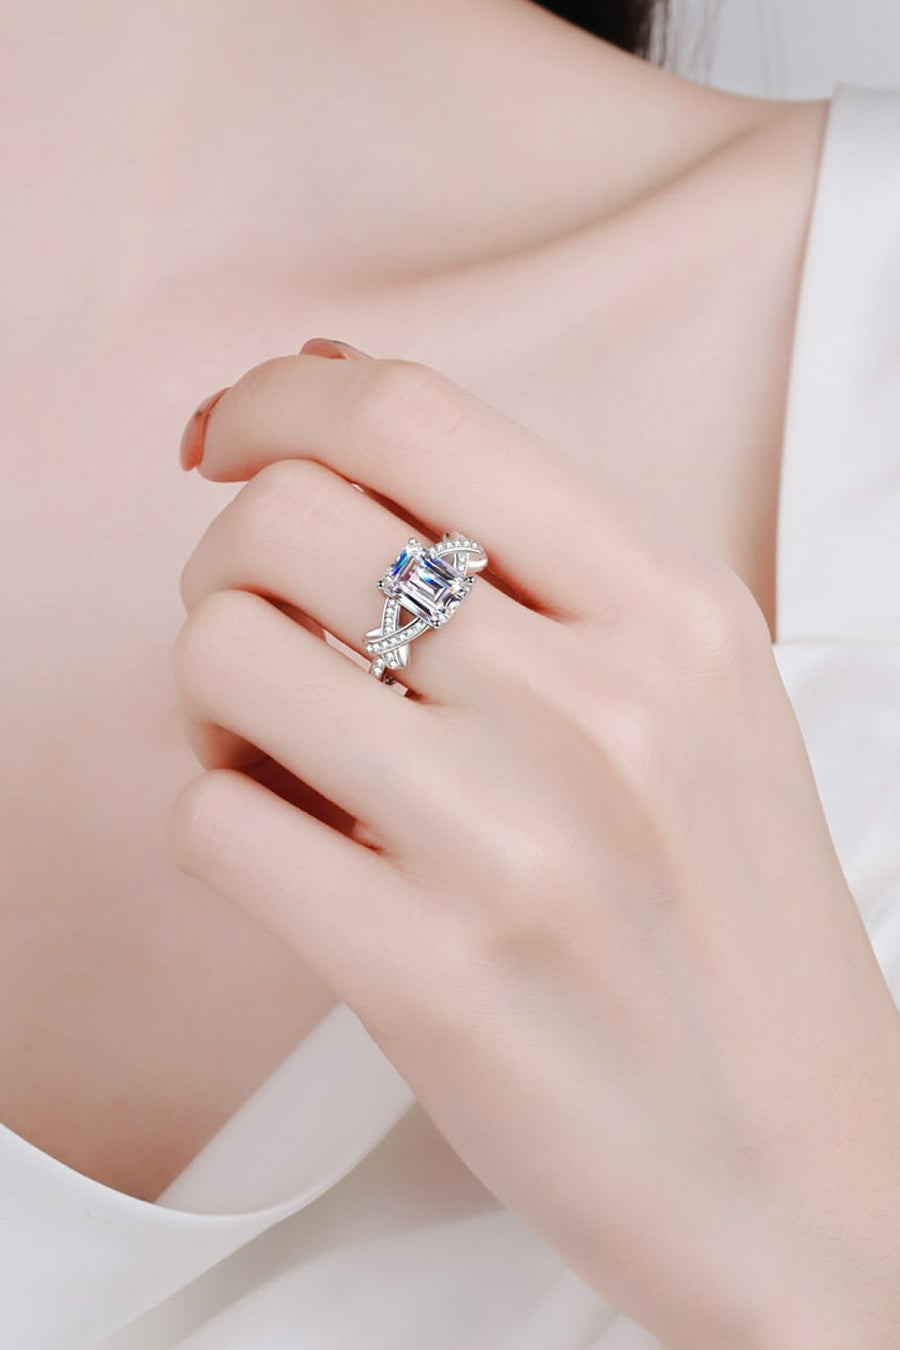 #1 BEST Diamond Ring Jewelry Gifts for Women | Best Trending 3 Carat Emerald Diamond Ring - Perfect Days | MASON New York